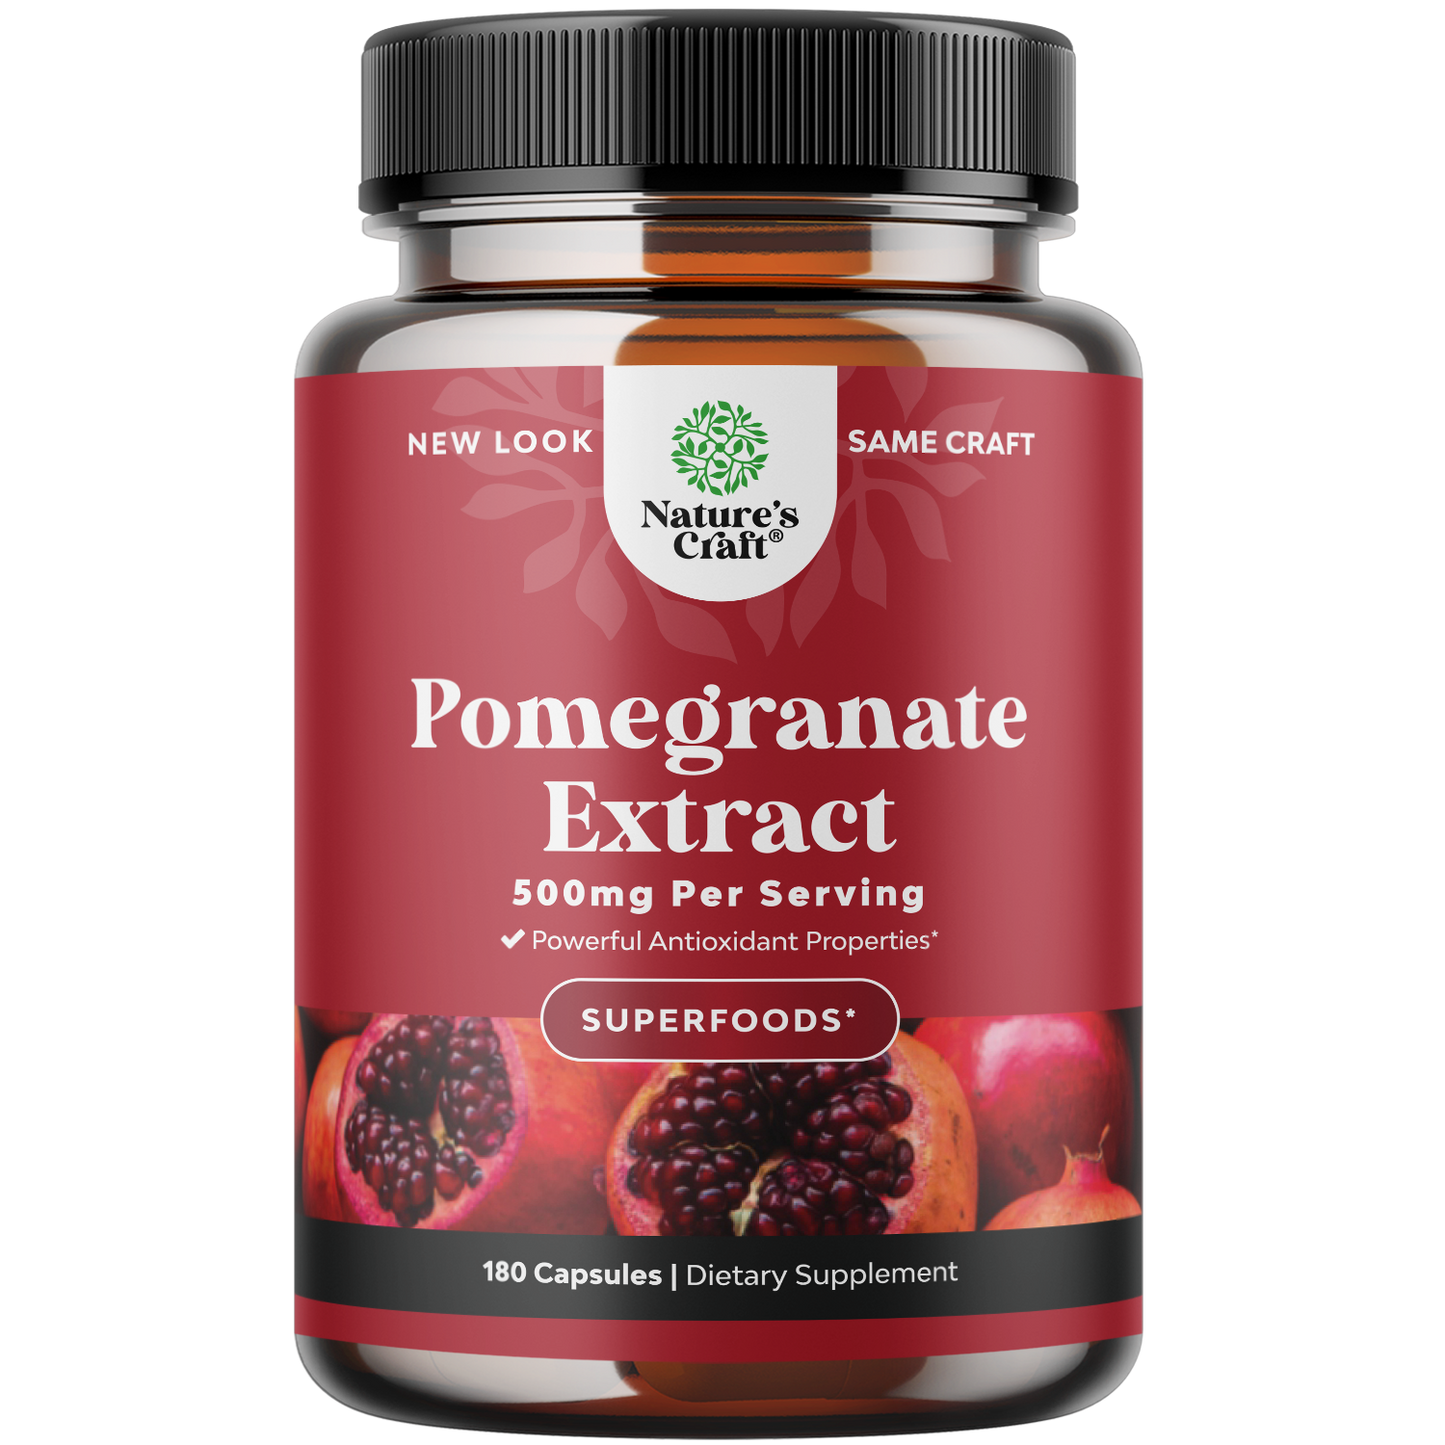 Pomegranate Extract - 180 Capsules